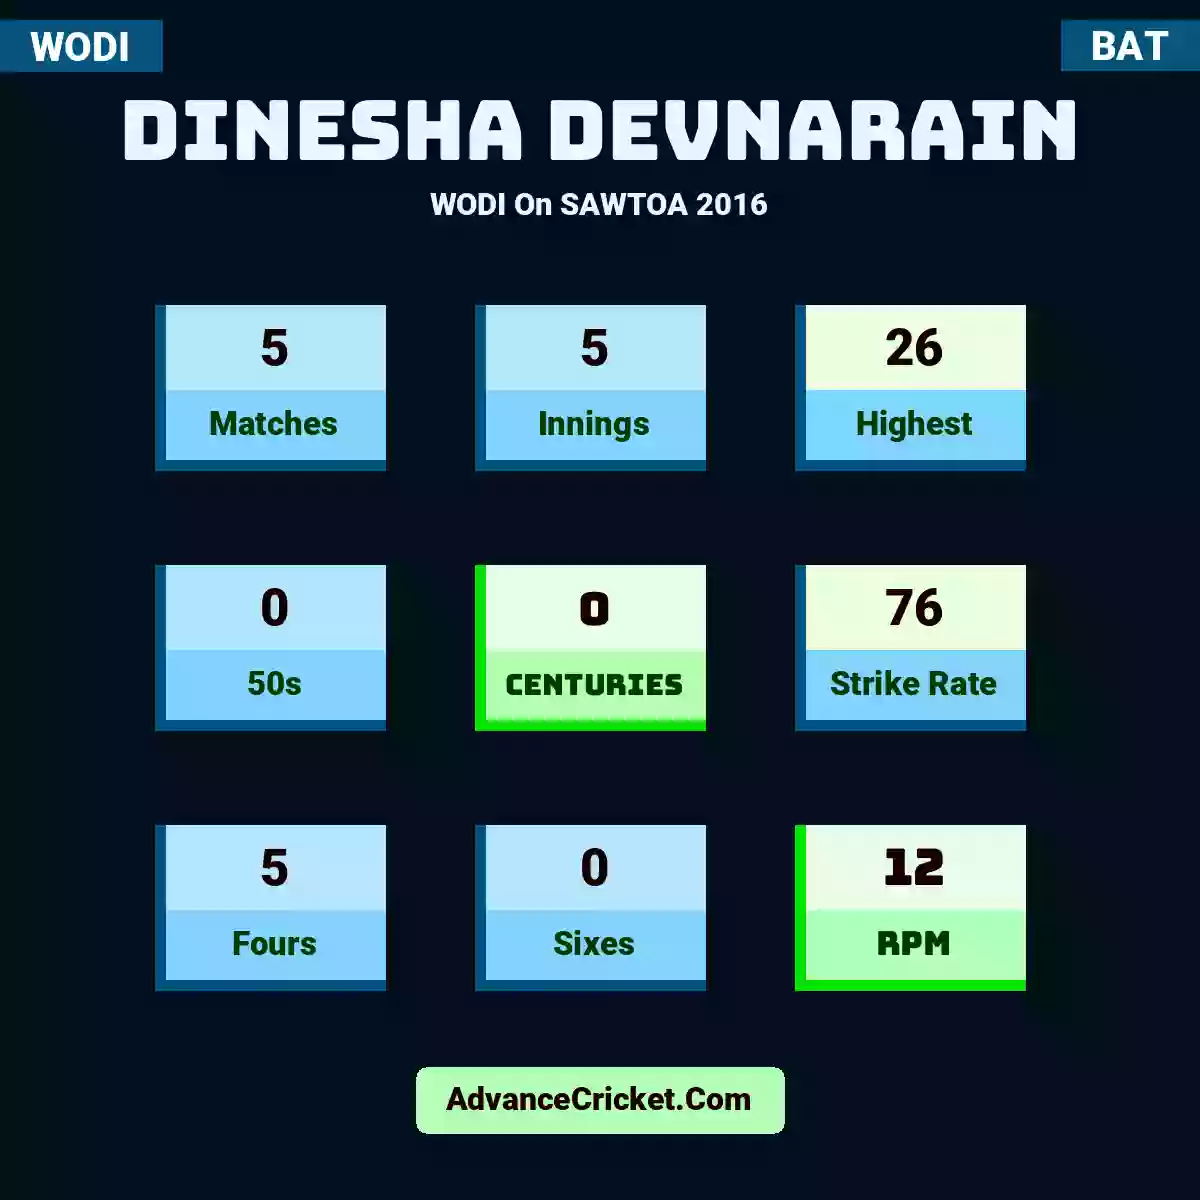 Dinesha Devnarain WODI  On SAWTOA 2016, Dinesha Devnarain played 5 matches, scored 26 runs as highest, 0 half-centuries, and 0 centuries, with a strike rate of 76. D.Devnarain hit 5 fours and 0 sixes, with an RPM of 12.